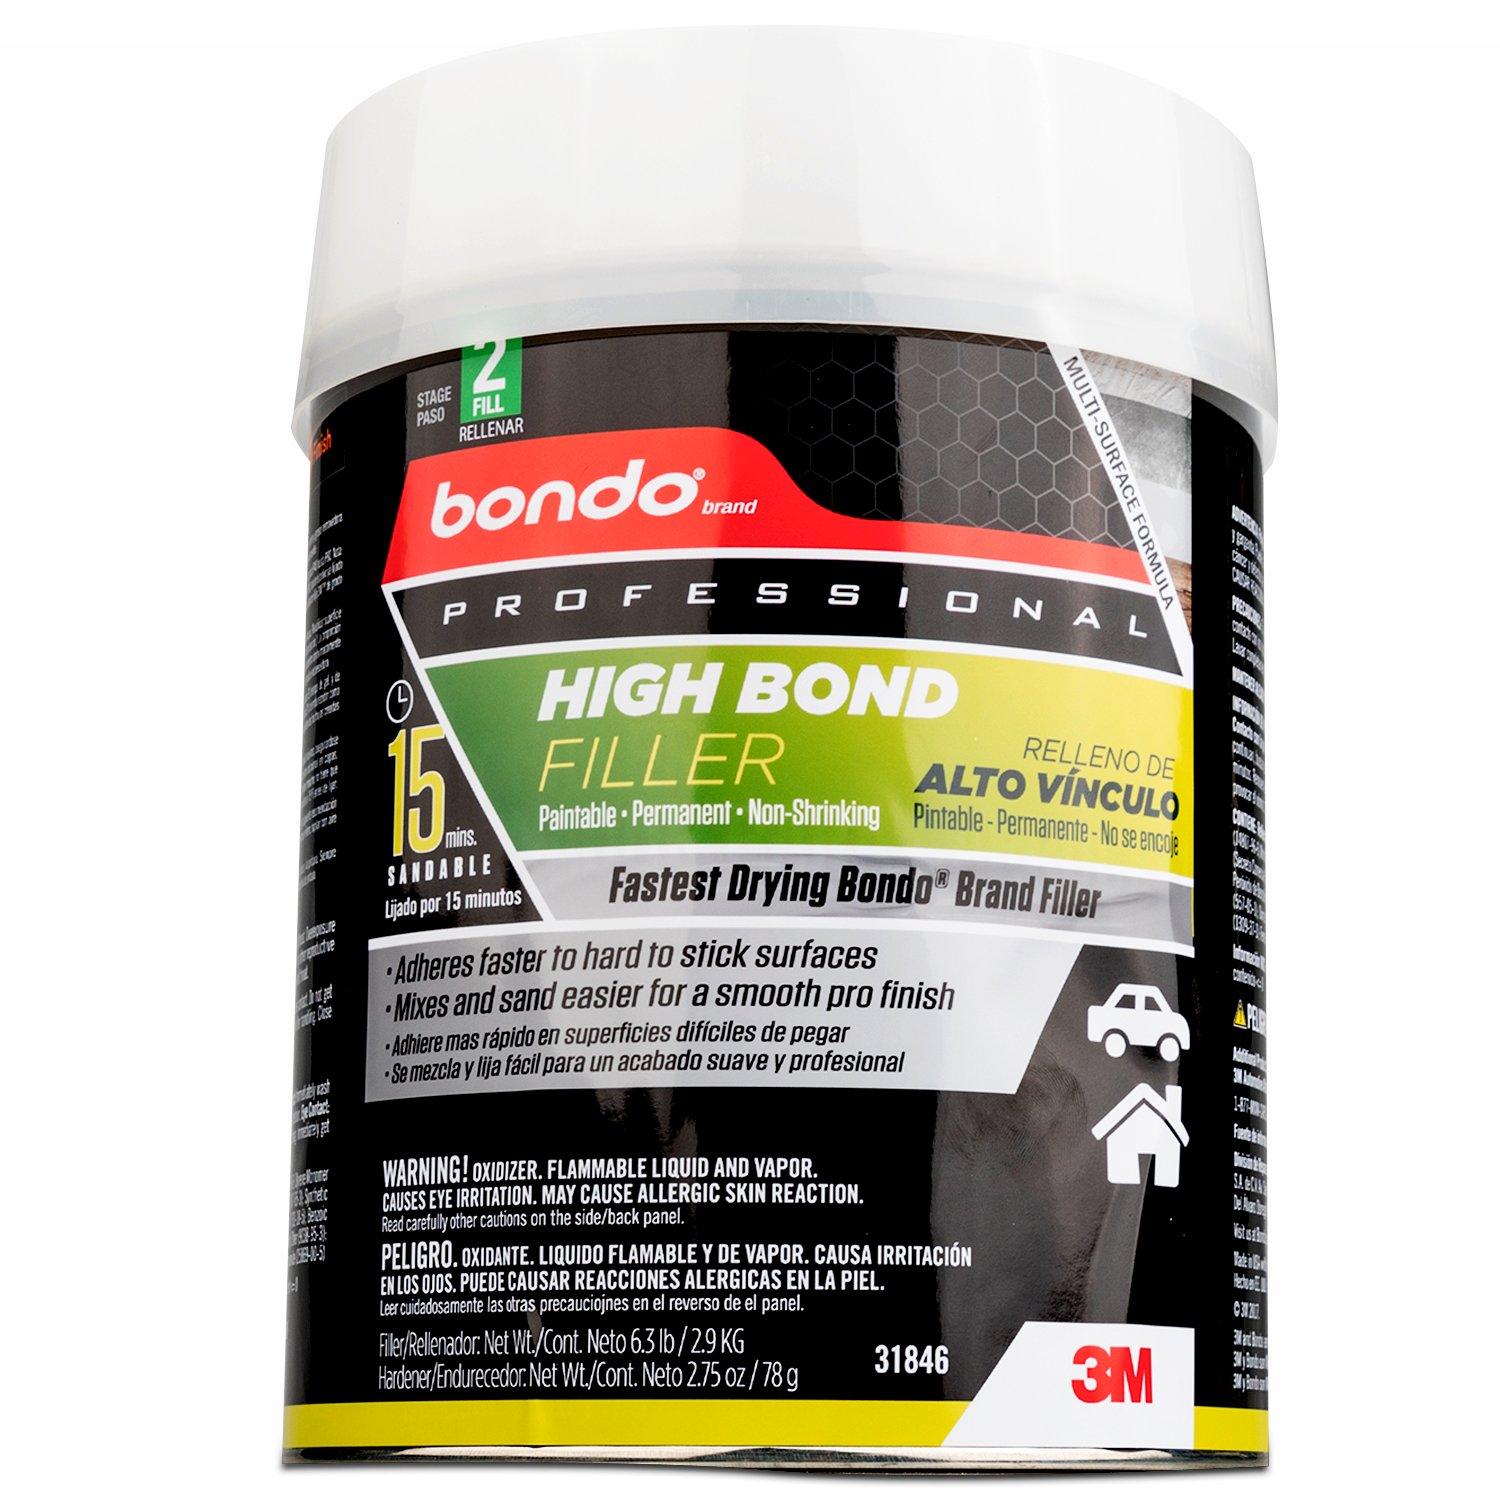 Bondo Auto Body Filler - Ace Hardware